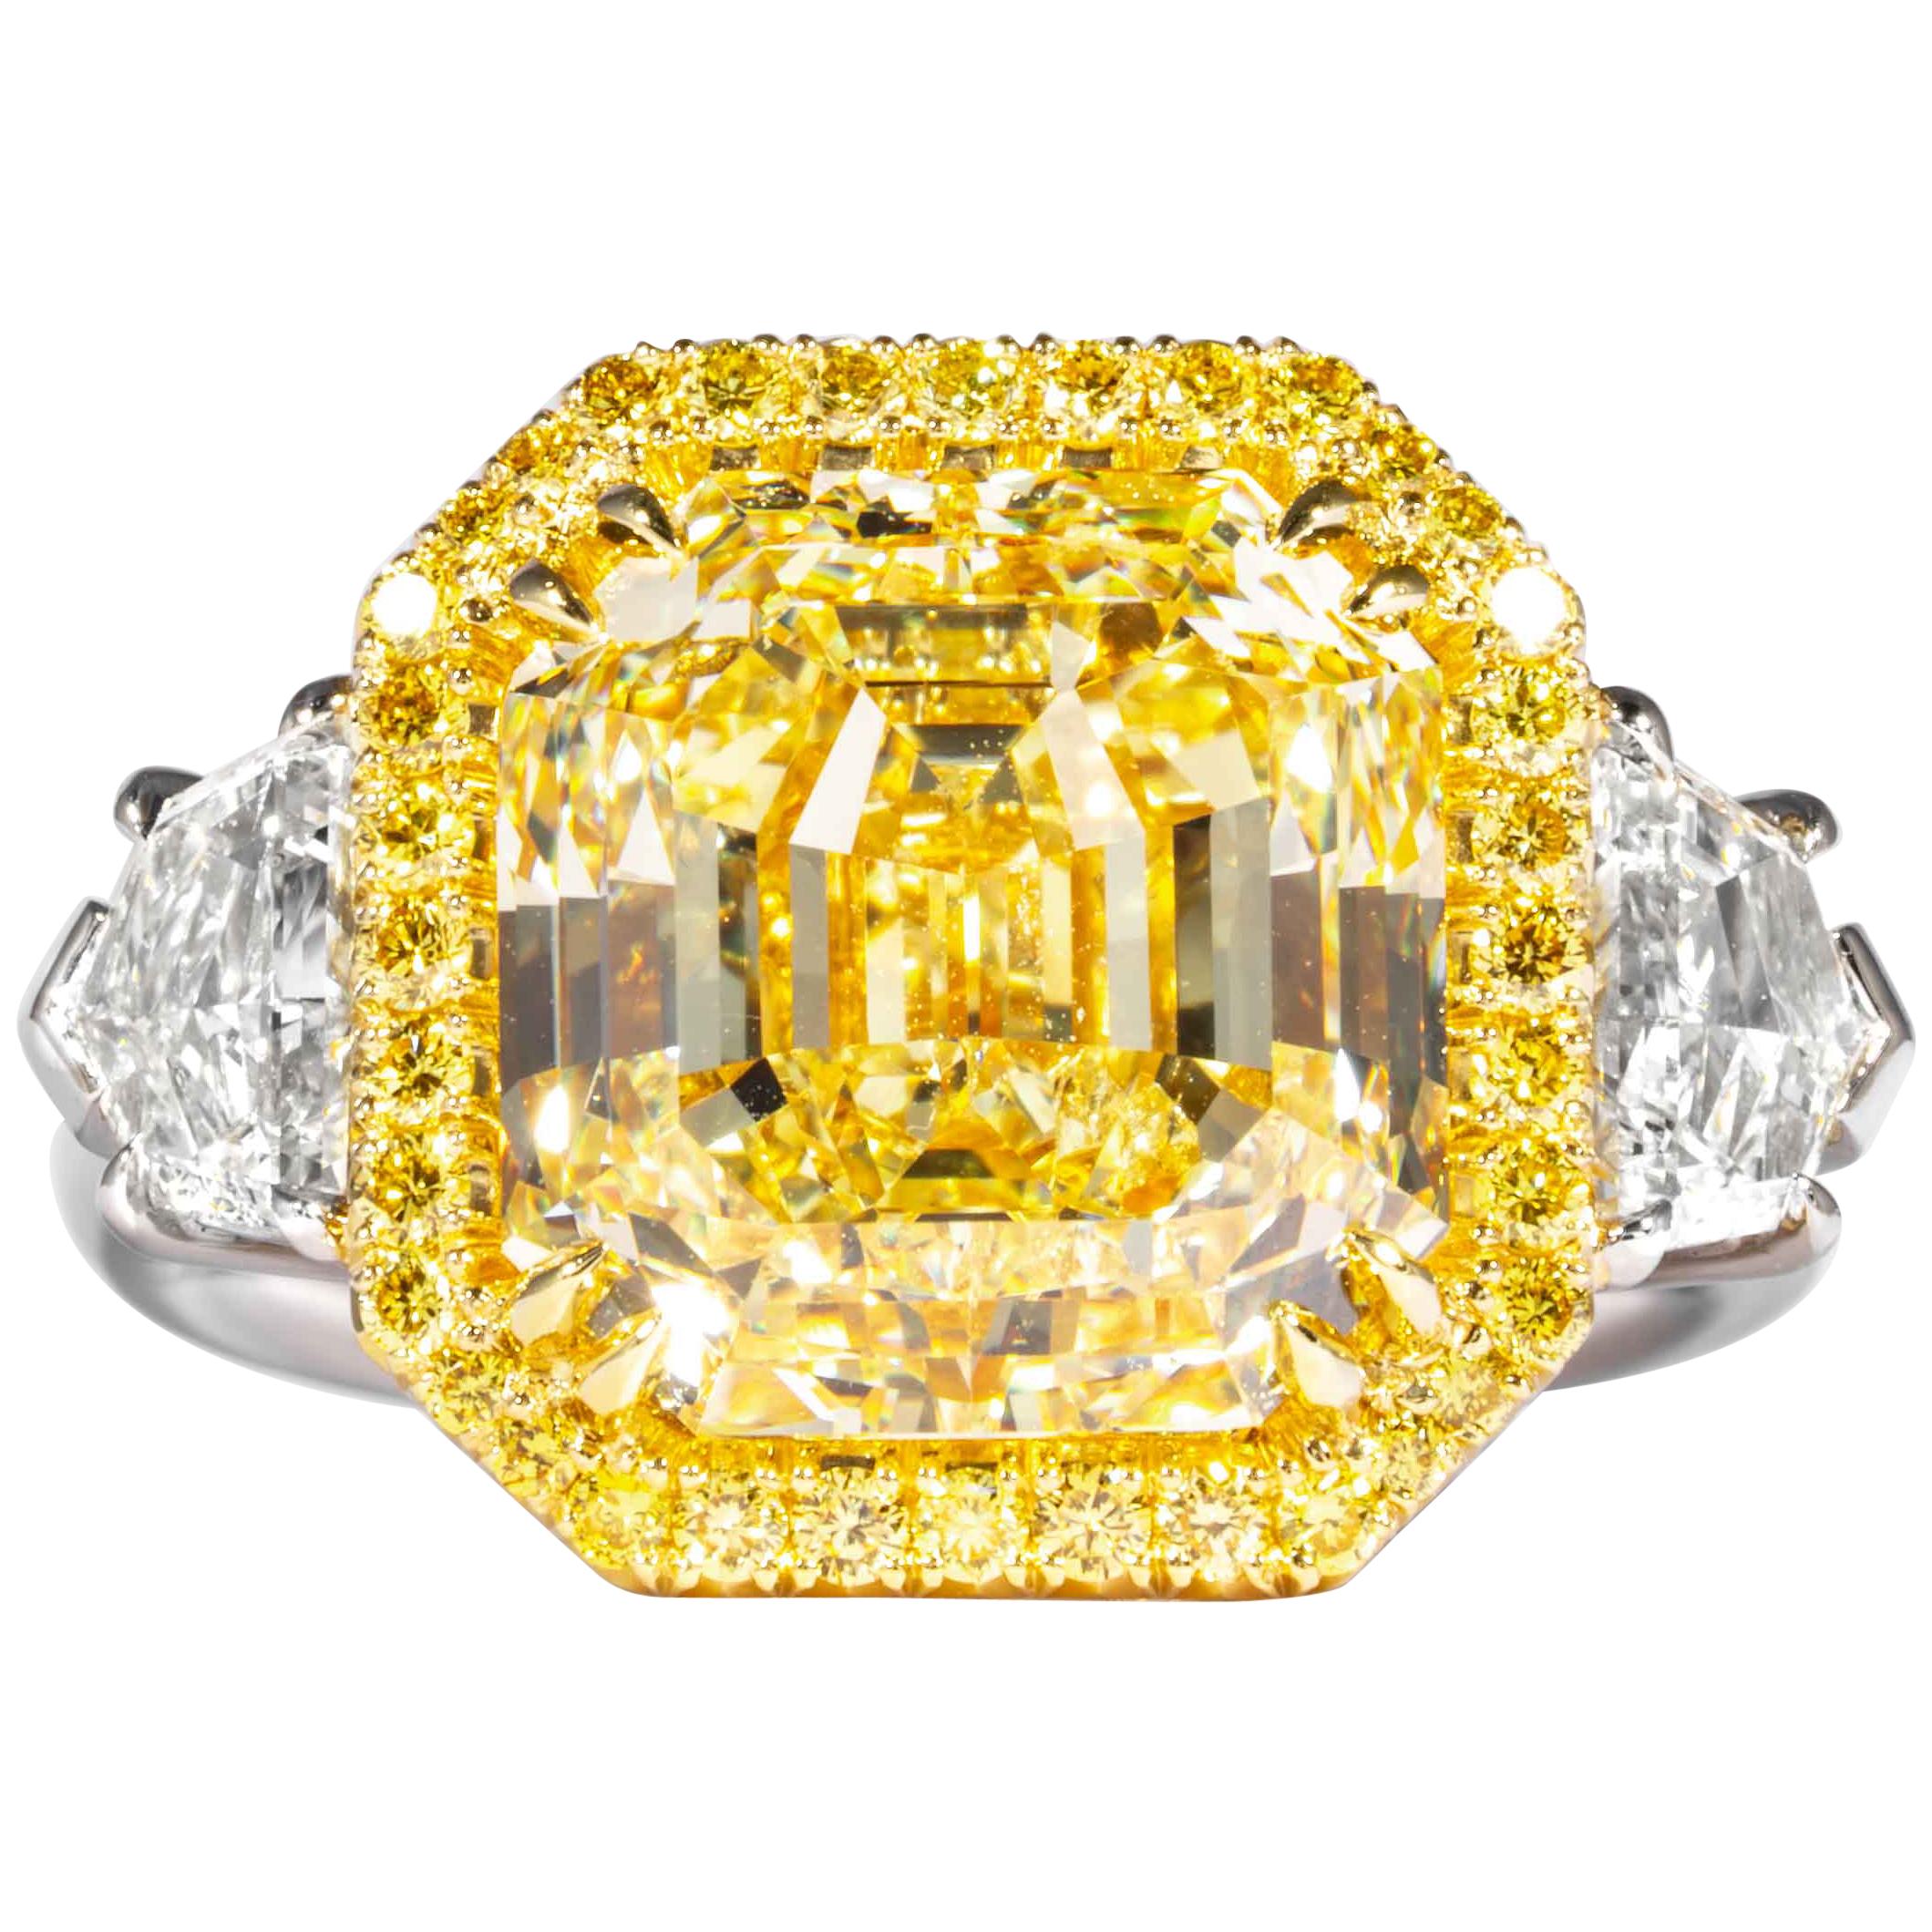 Shreve, Crump & Low GIA Certified 8.02 Carat Fancy Yellow Asscher Diamond Ring For Sale